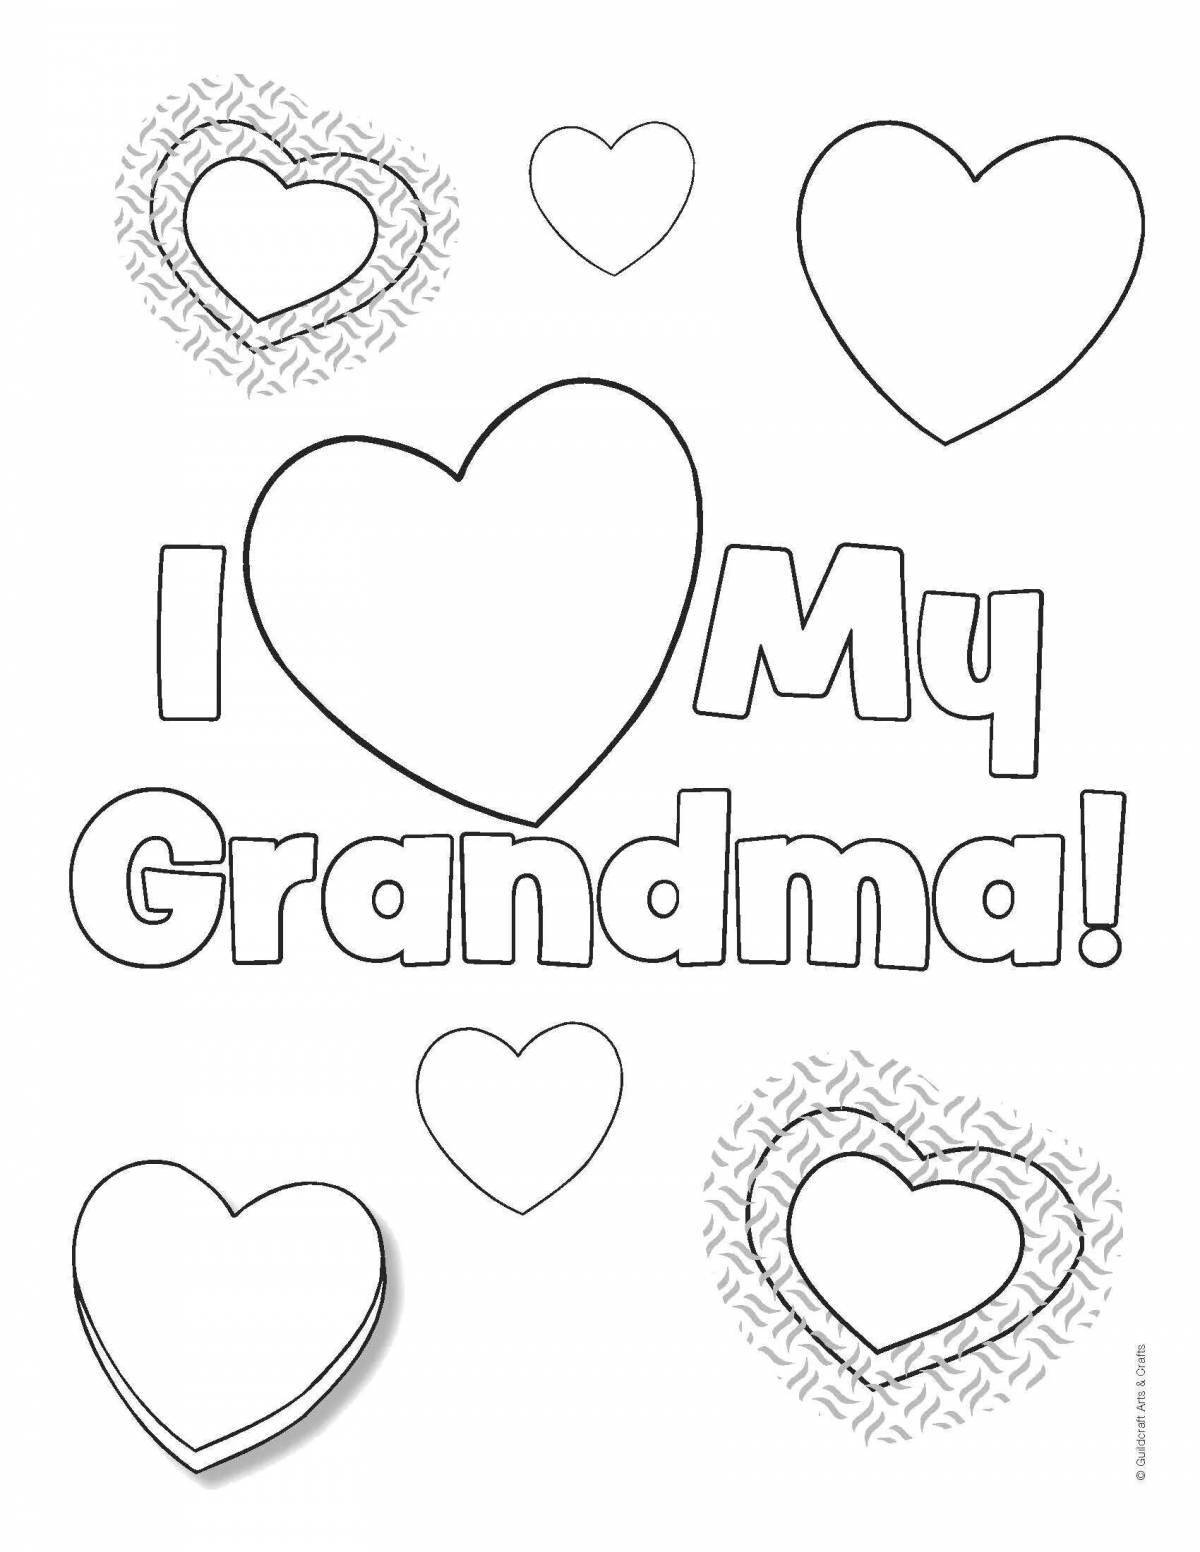 Замечательная открытка-раскраска для бабушки